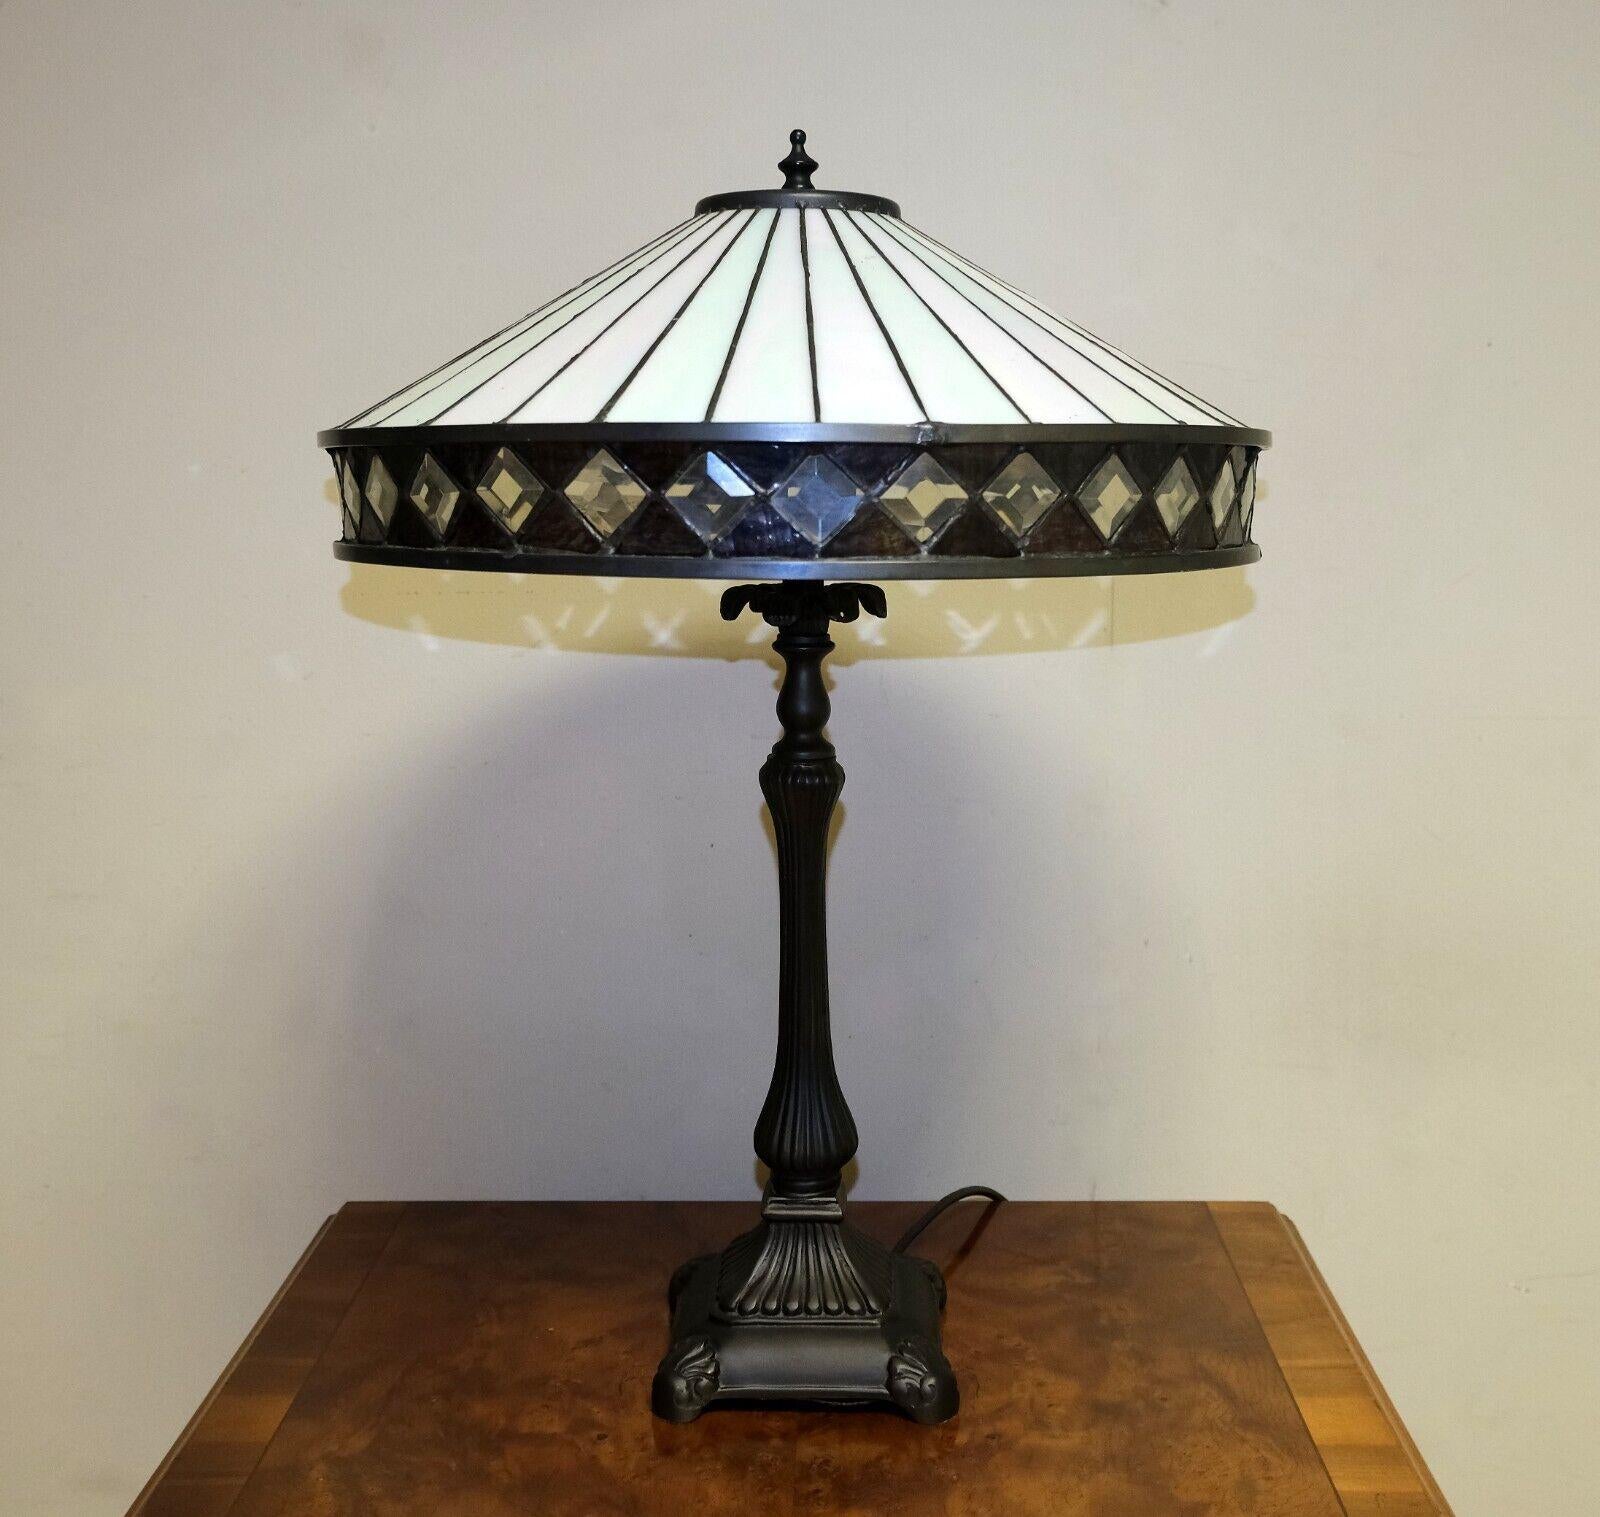 Métal GORGEUSE LAMPE DE TABLE TIFFANY STYLE EN BRONZE COLORÉ DE VERRE DE DIAMANT en vente